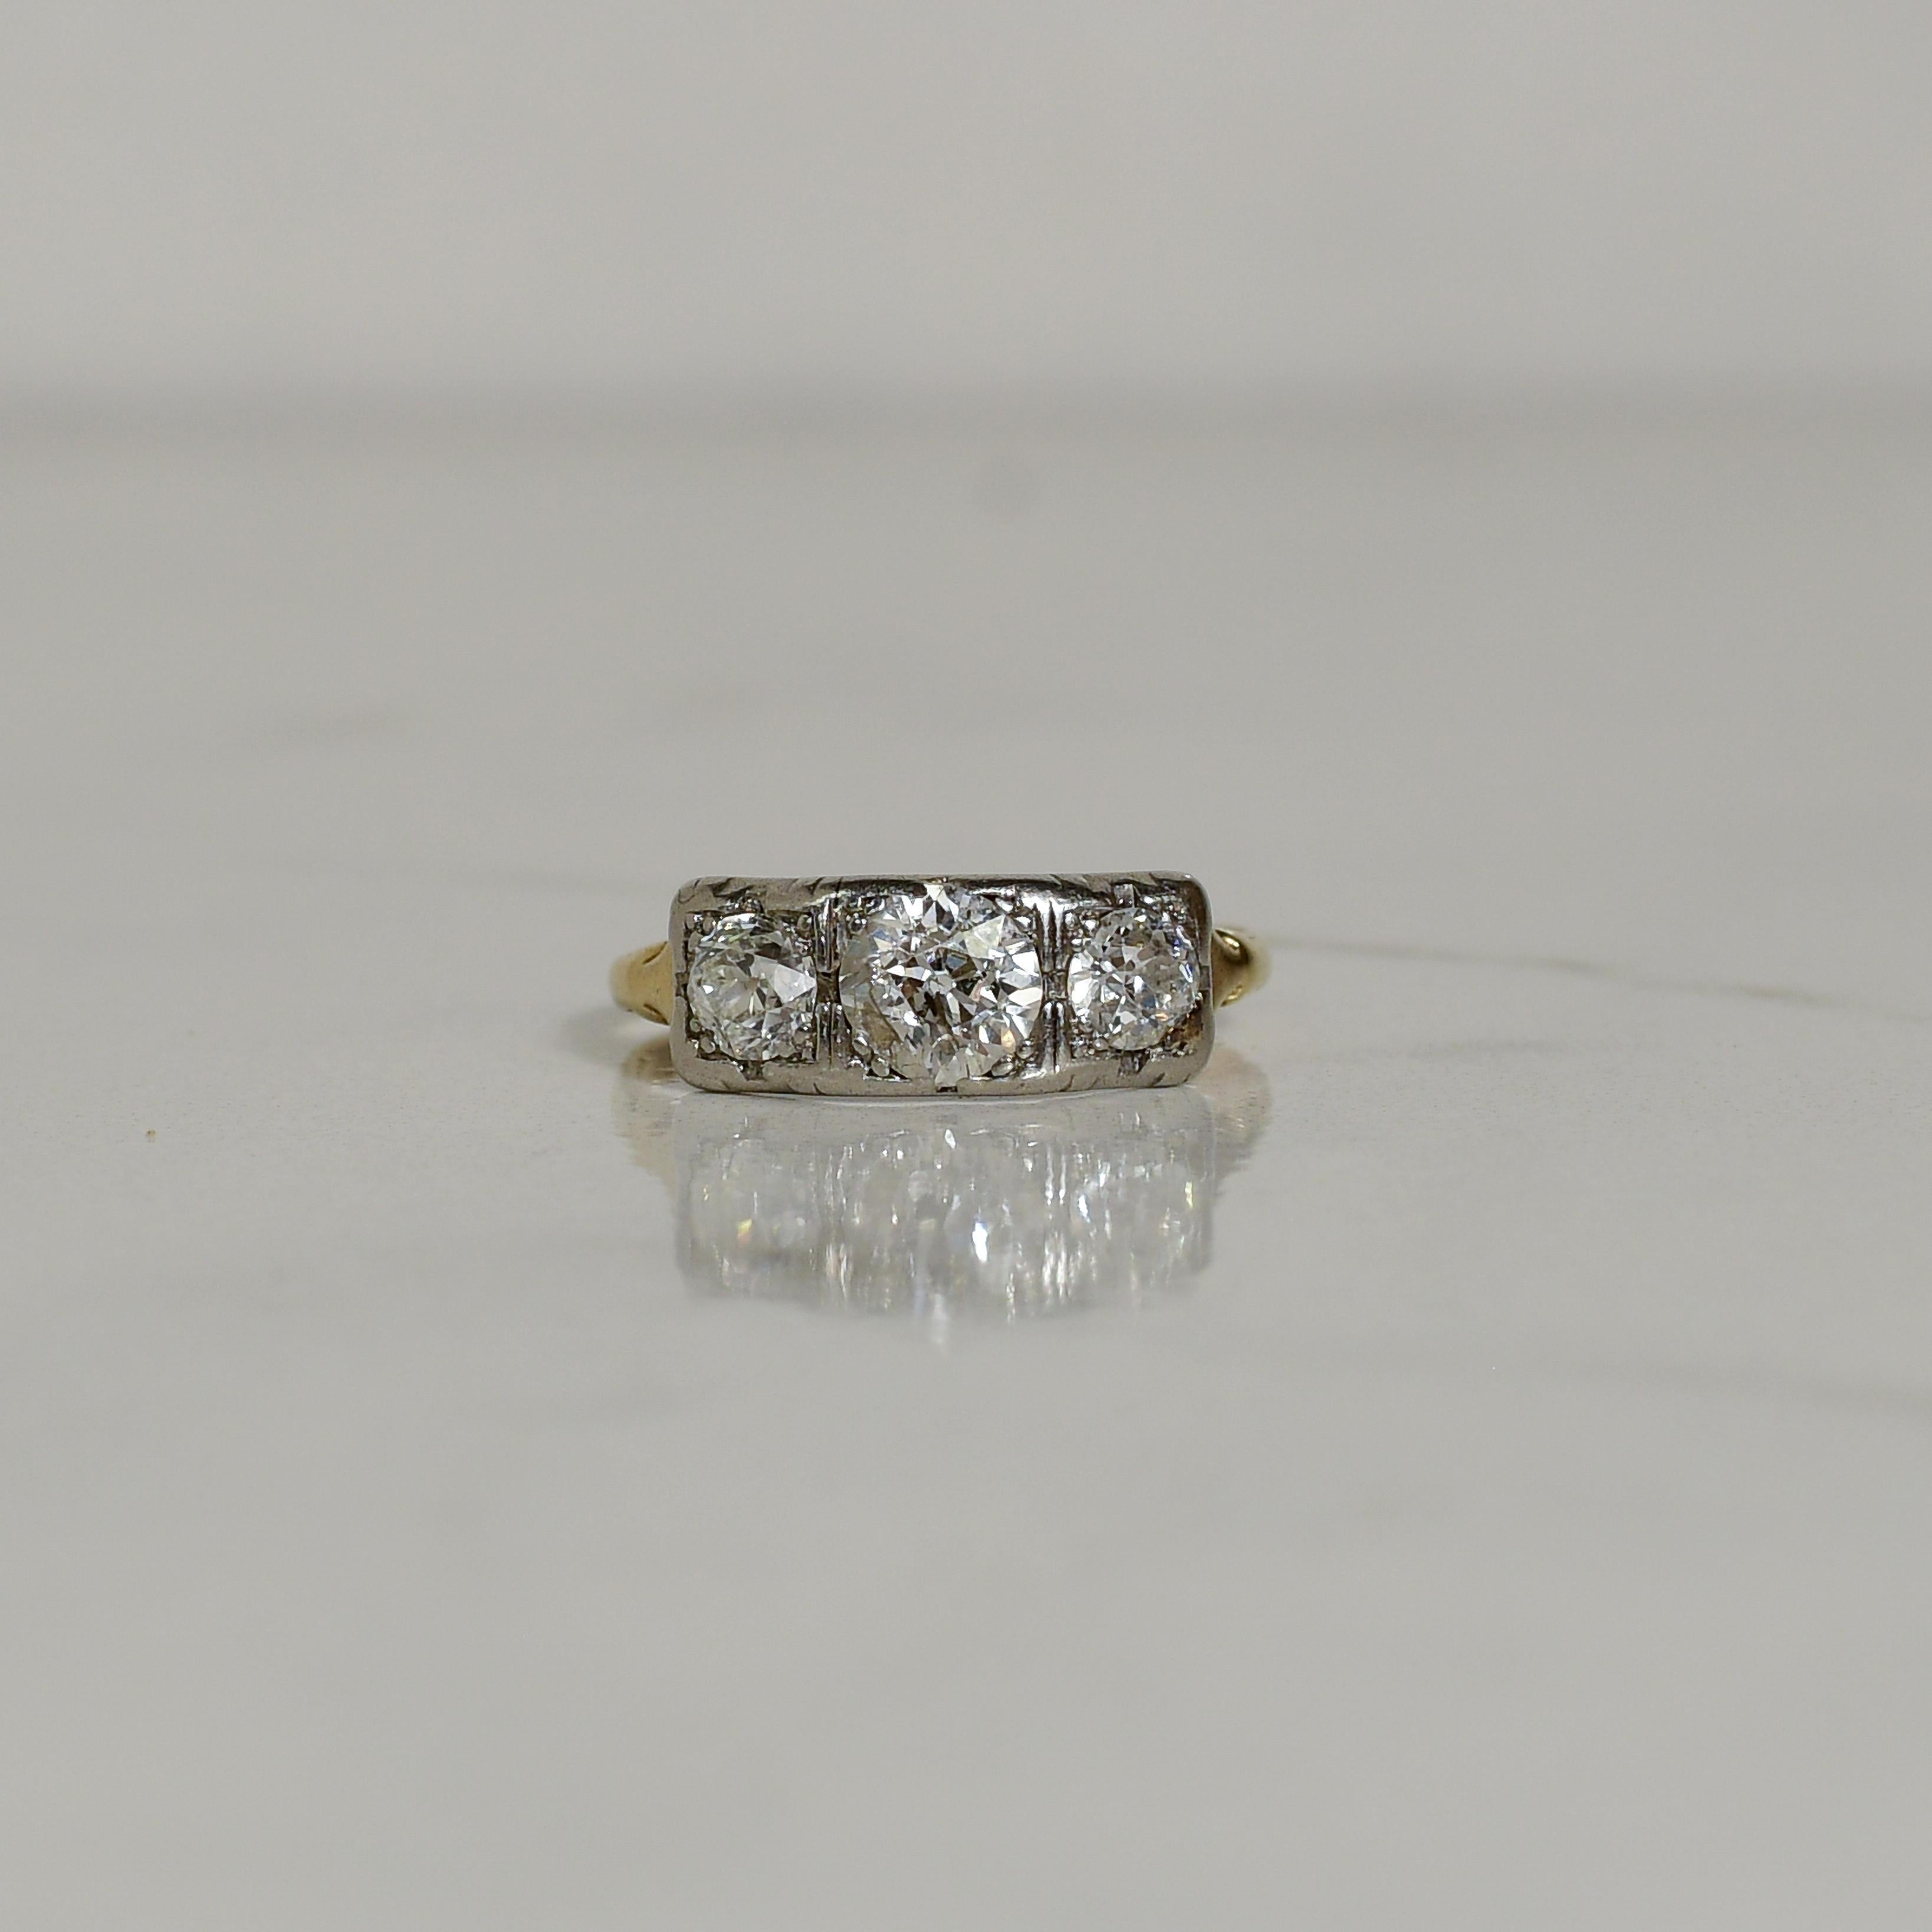 1.3cttw Art Deco 3 Stone Old European Cut Diamond Ring in 14K Gold & Platinum 2